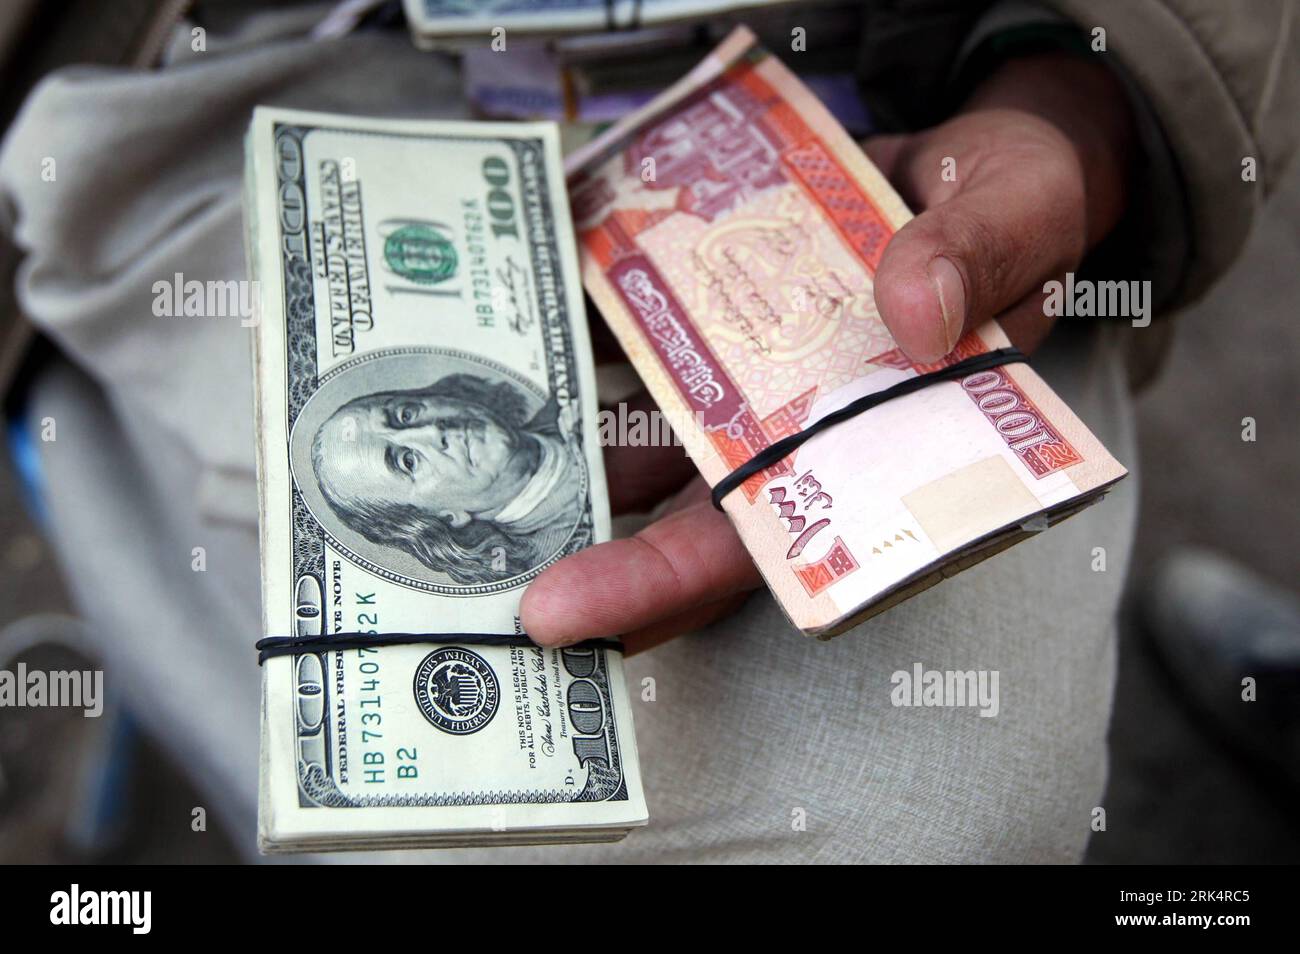 Bildnummer: 53661581  Datum: 12.12.2009  Copyright: imago/Xinhua (091212) -- KABUL, Dec. 12, 2009 (Xinhua) -- An Afghan dealer holds U.S. dollar banknotes and Afghan Afghani banknotes at a foreign currency market in Kabul, capital of Afghanistan, on Dec. 12, 2009. A seminar was held recently to discuss ways on how to prevent U.S. dollars from being taken out of Afghanistan illegally. (Xinhua/Zabi Tamanna) (lr) AFGHANISTAN-KABUL-U.S. DOLLARS-ILLEGAL TRANSFER-CURB PUBLICATIONxNOTxINxCHN Geldwechsel Geld Währung wechseln Wechsel kbdig xng 2009 quer premiumd o0 Schein Geldschein Körperteile Hand o Stock Photo